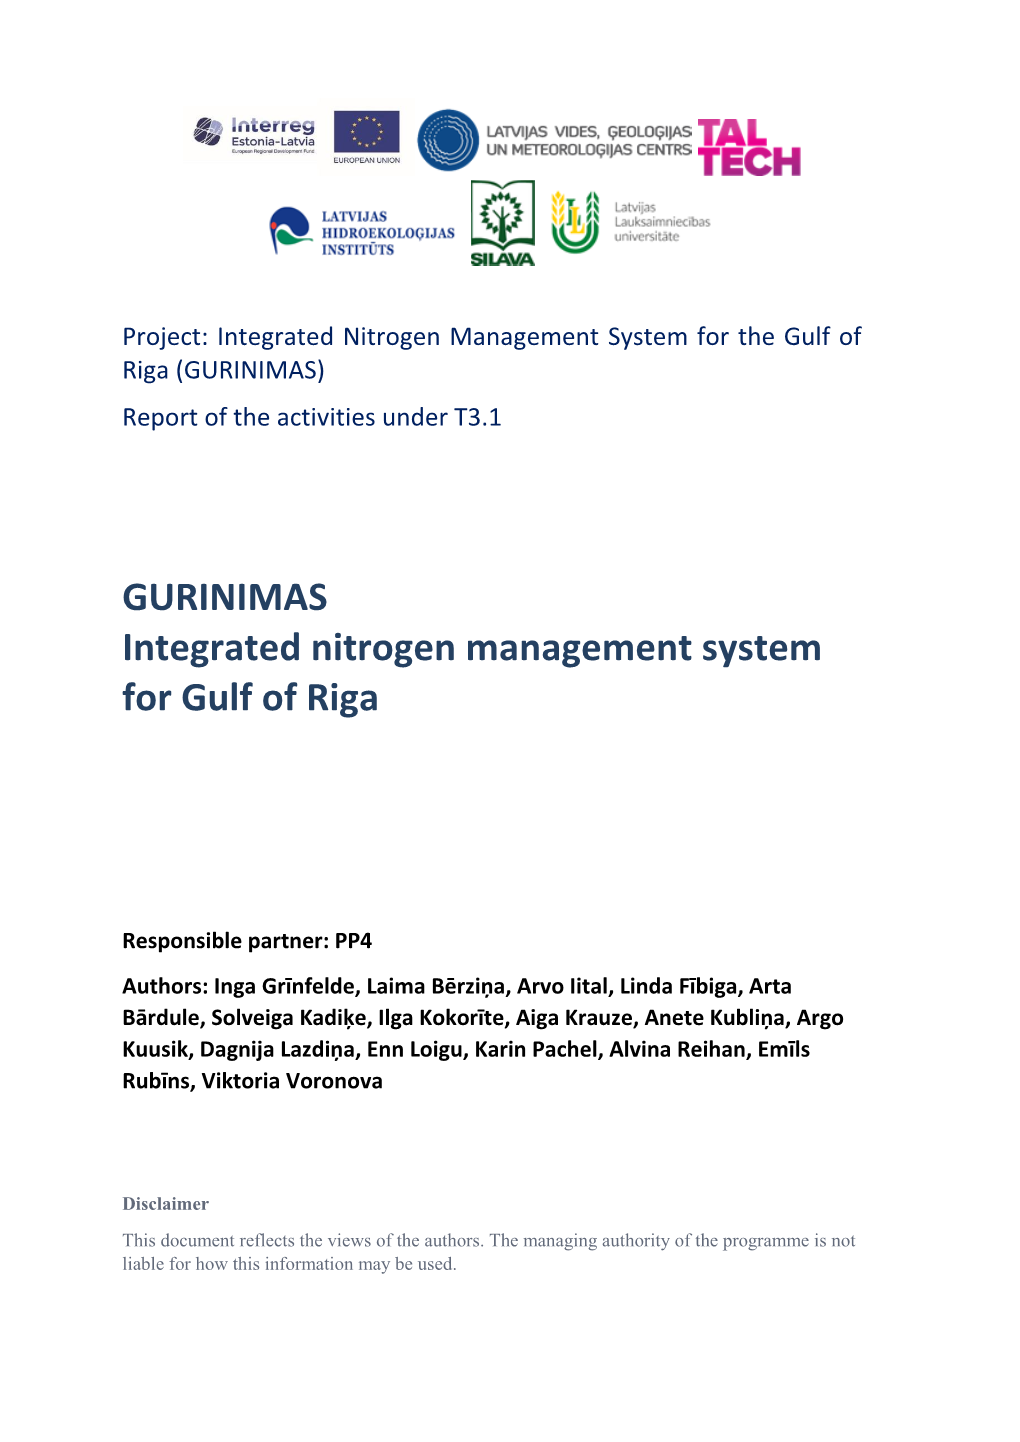 GURINIMAS Integrated Nitrogen Management System for Gulf of Riga